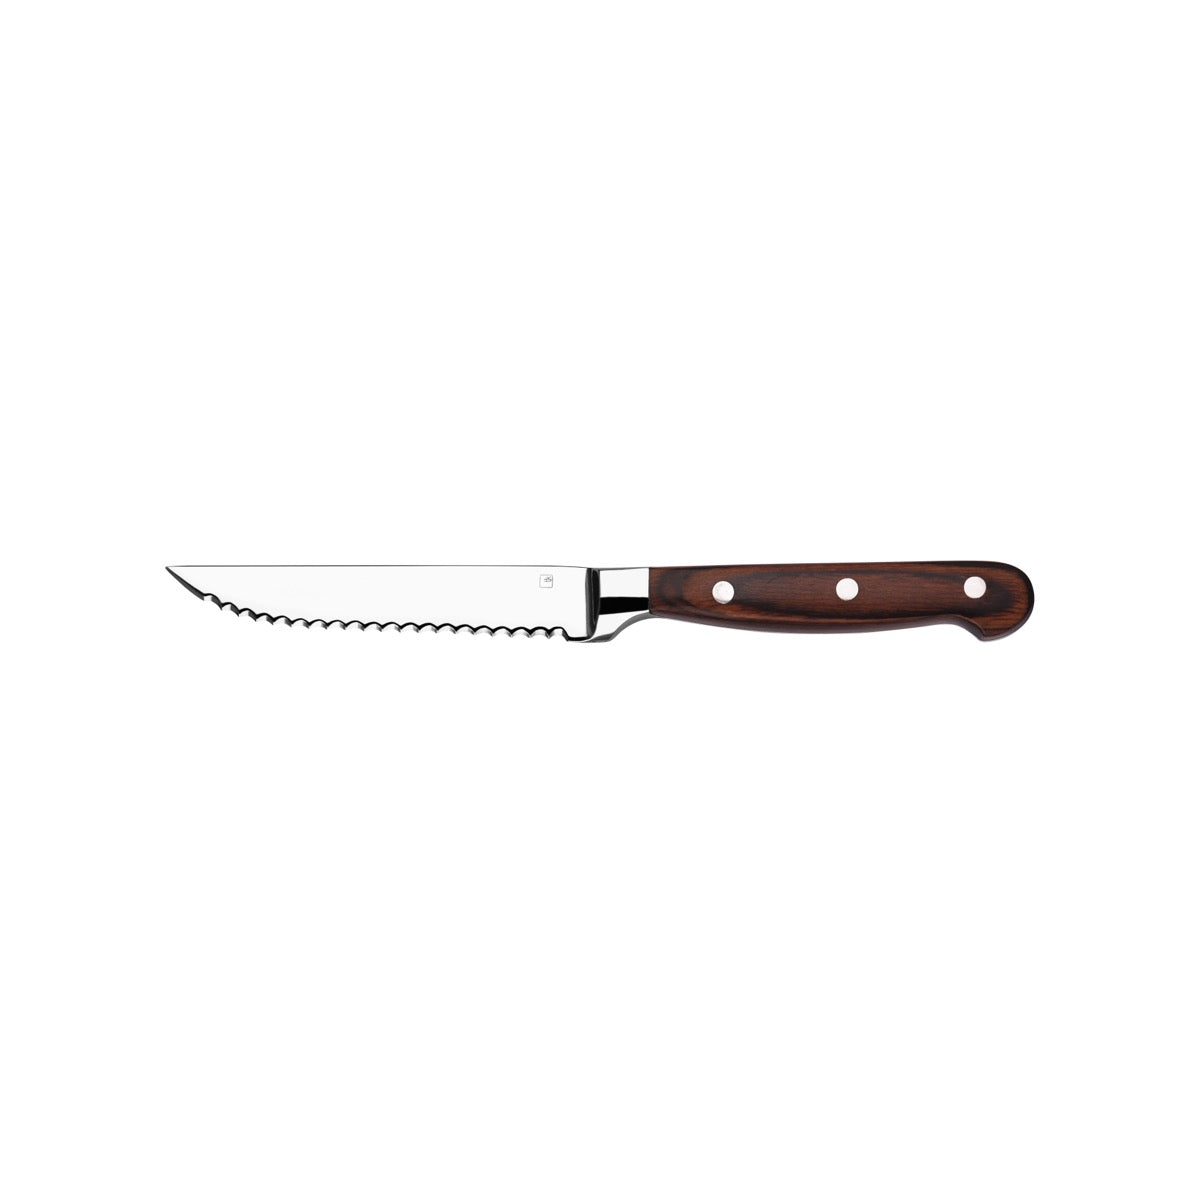 20677-8 Tablekraft Steak Knive Pakkawood Handle Full Tang Set 8pc Tomkin Australia Hospitality Supplies